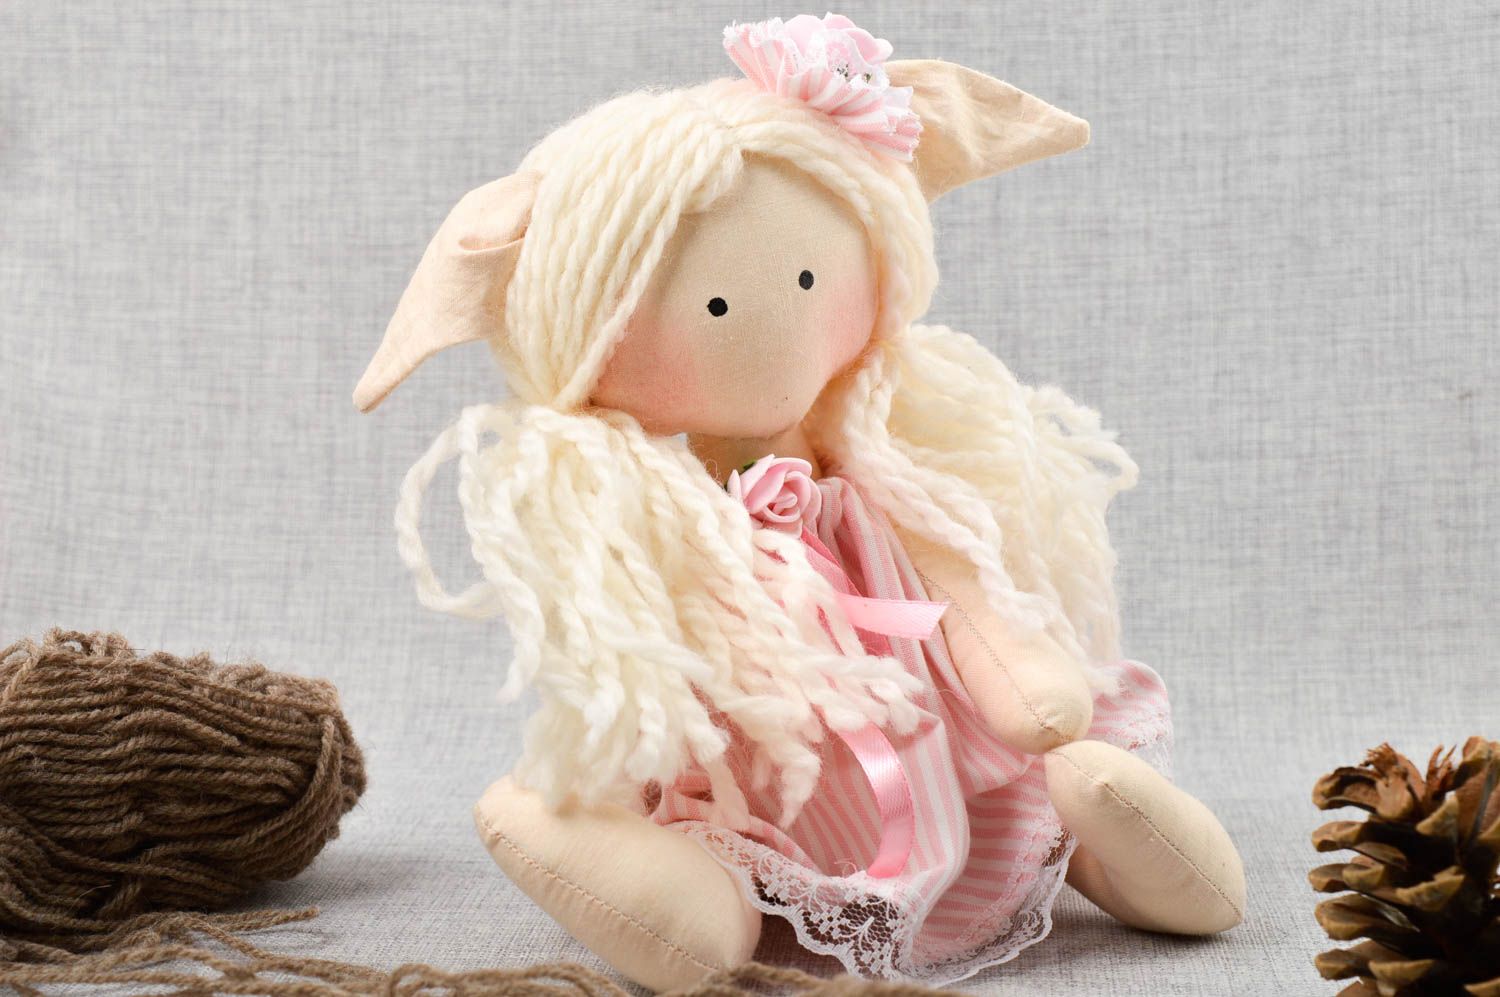 Unusual handmade rag doll stuffed soft toy cute toys decorative use only photo 1